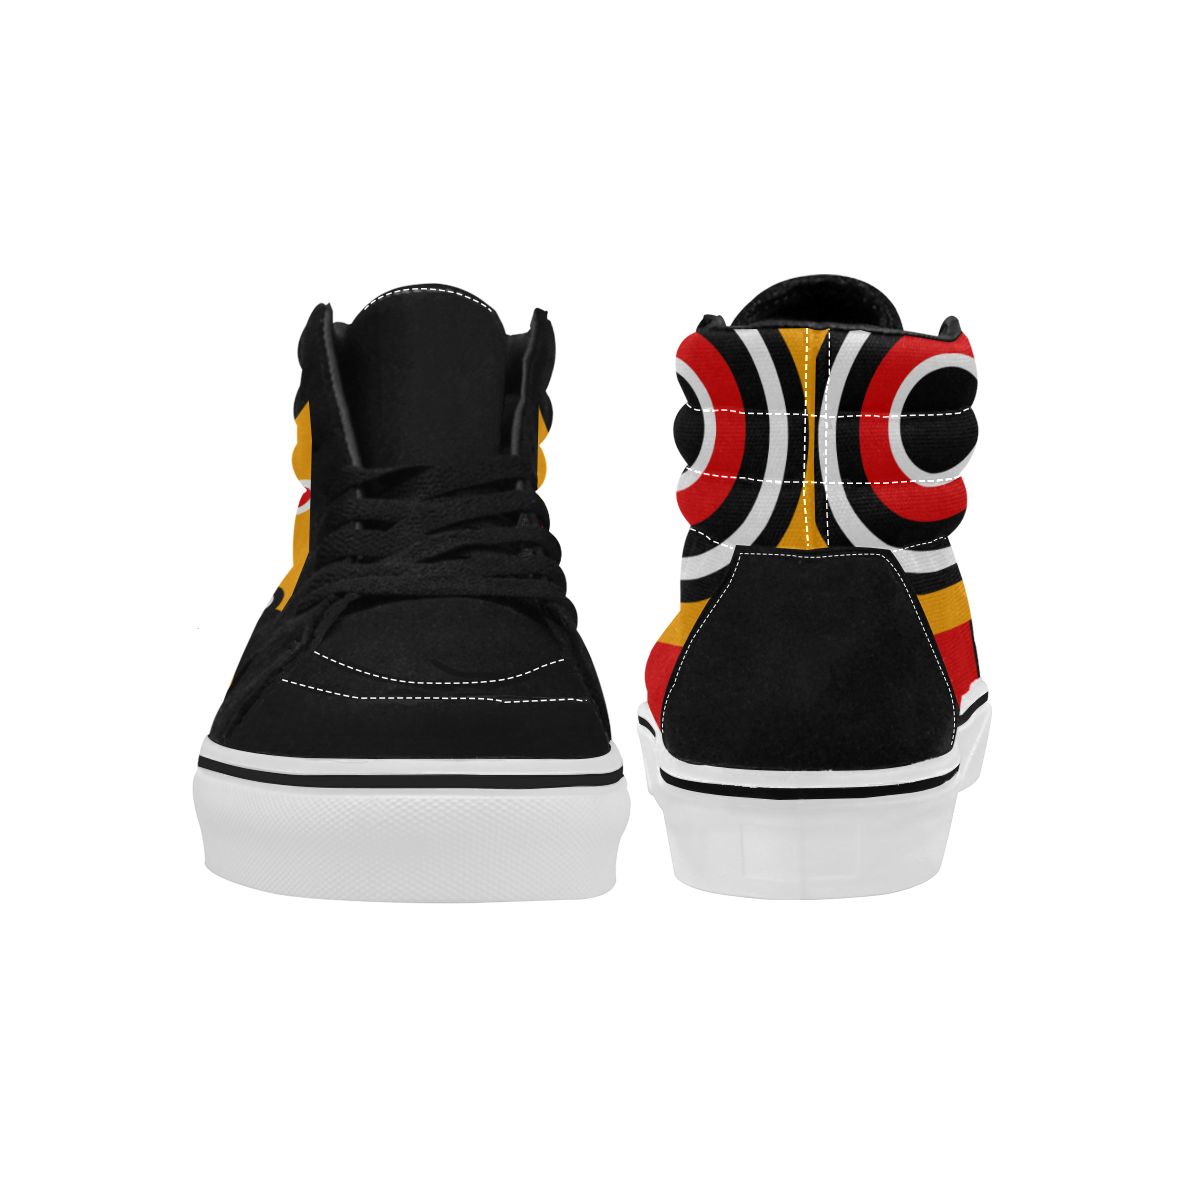 Red Yellow Tiki Tribal Women's High Top Skateboarding Shoes (Model E001-1)